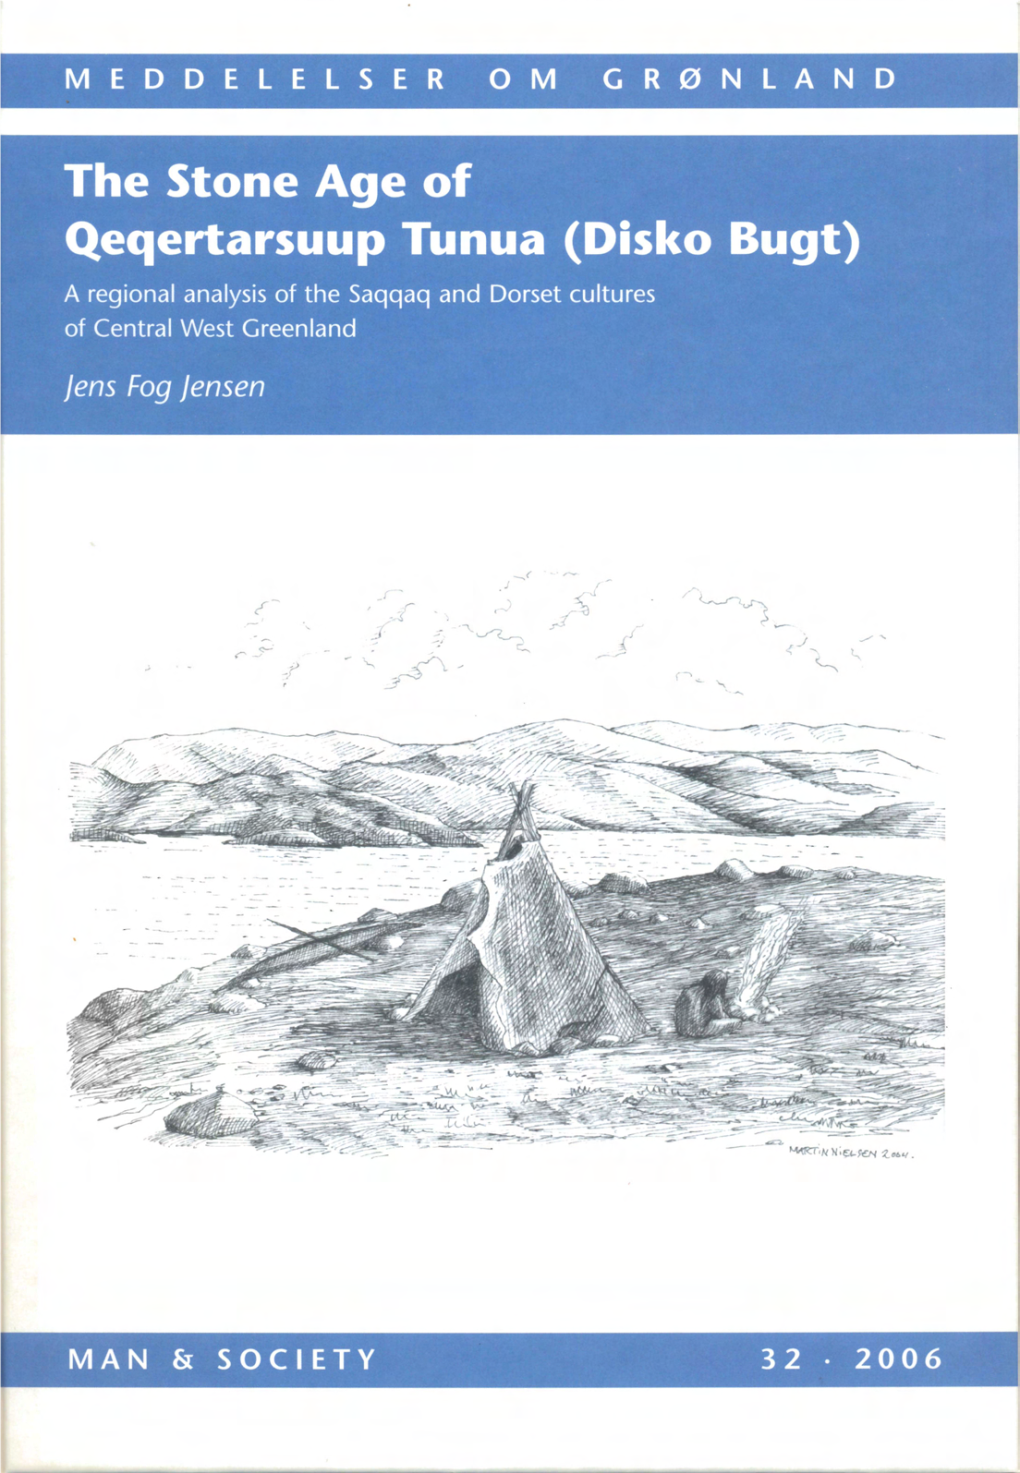 The Stone Age of Qeqertarsuup Tunua (Disko Bugt)